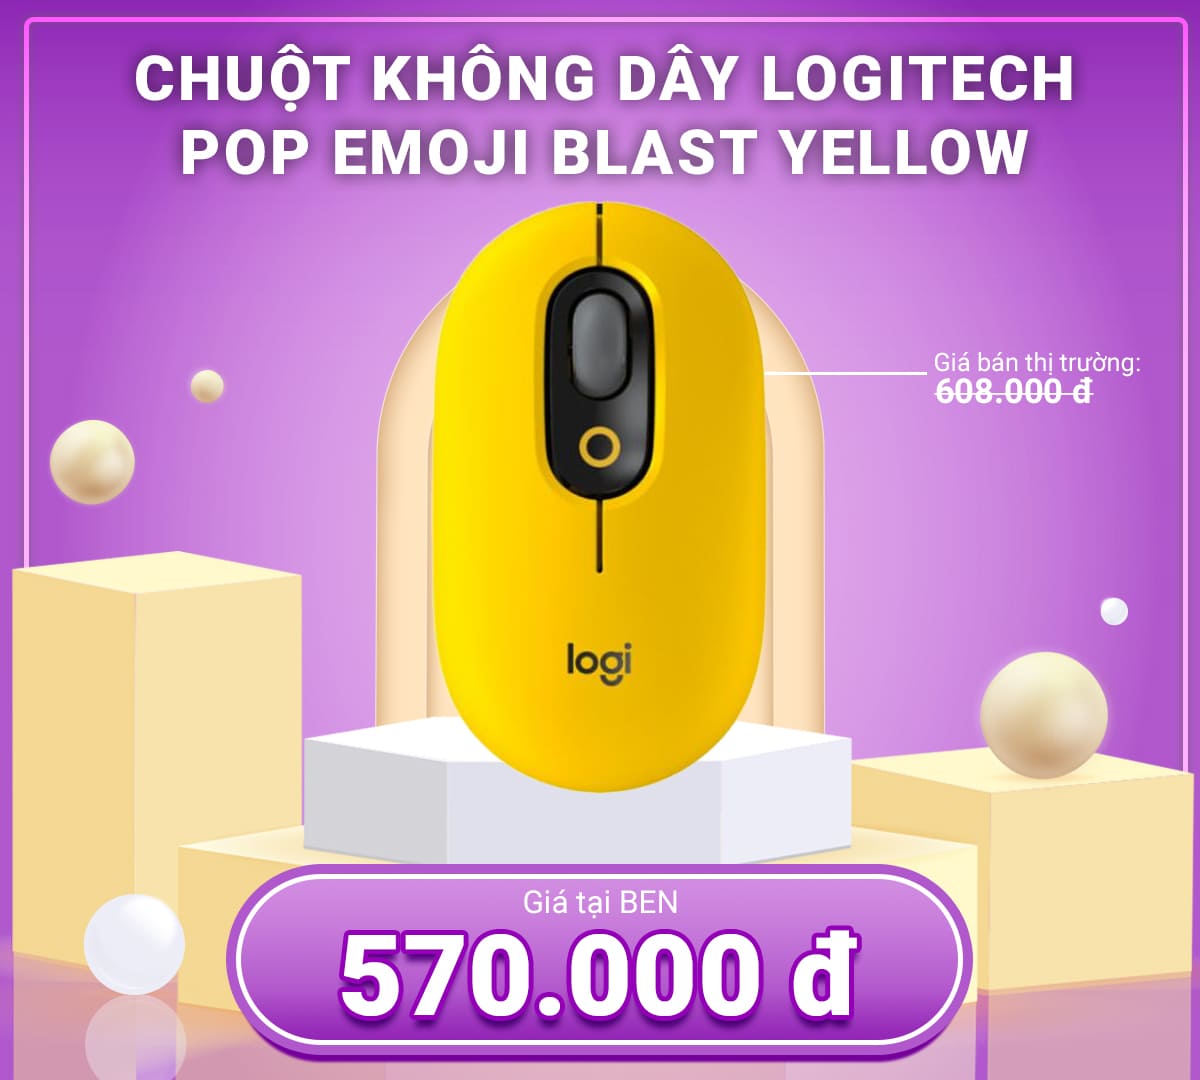 Pop Emoji Blast Yellow